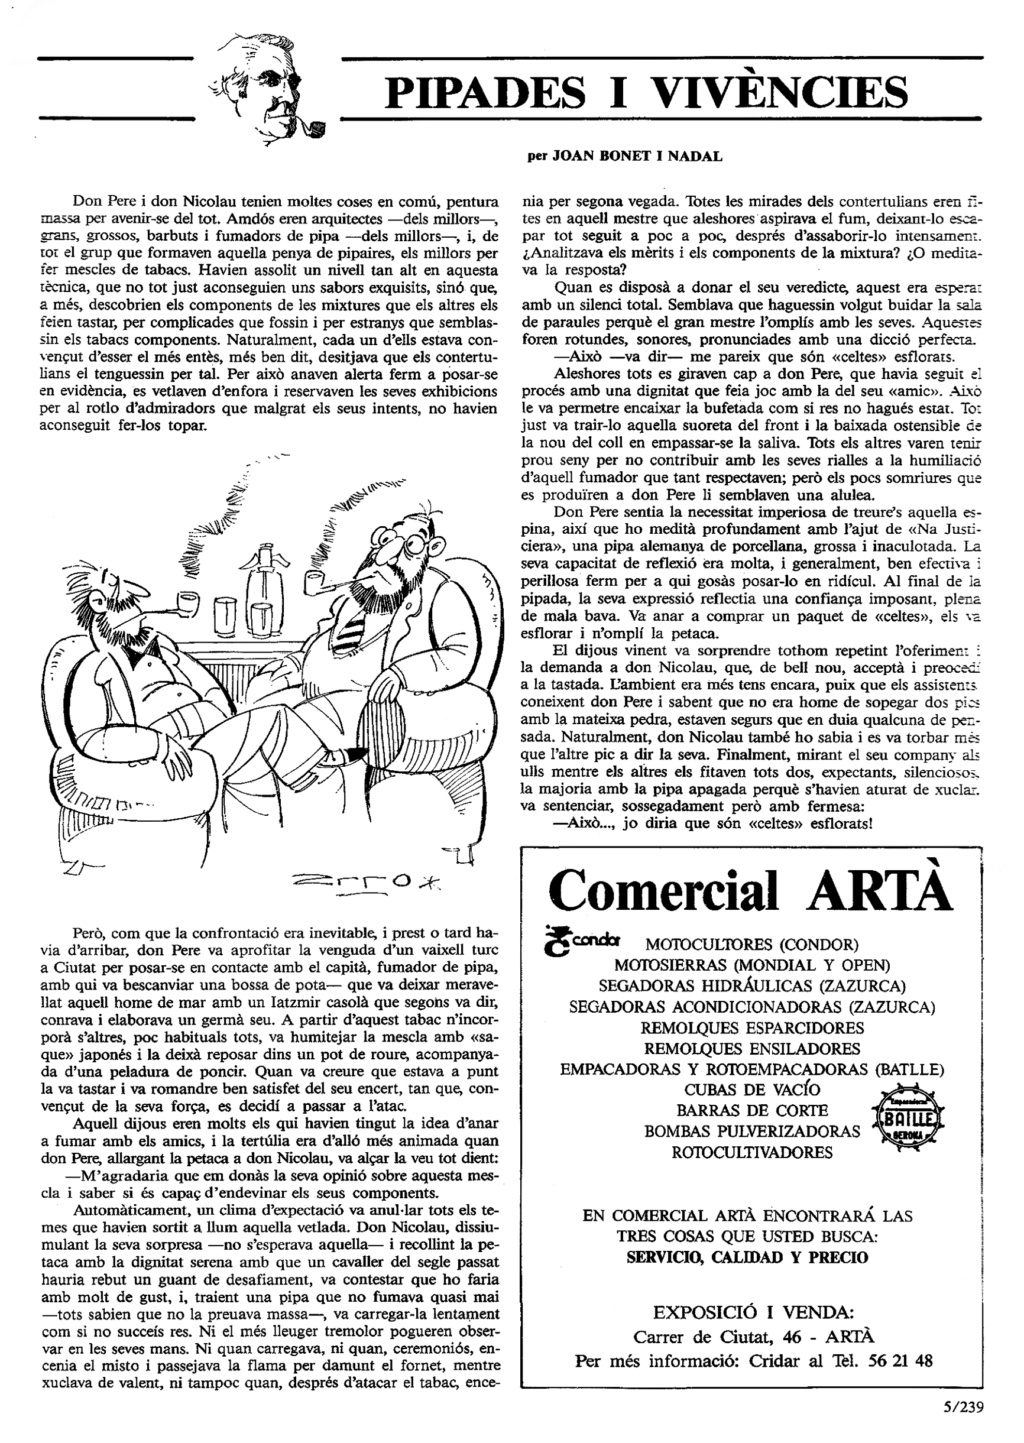 MAS COSAS DE JOAN BONET - Página 5 Artze_11